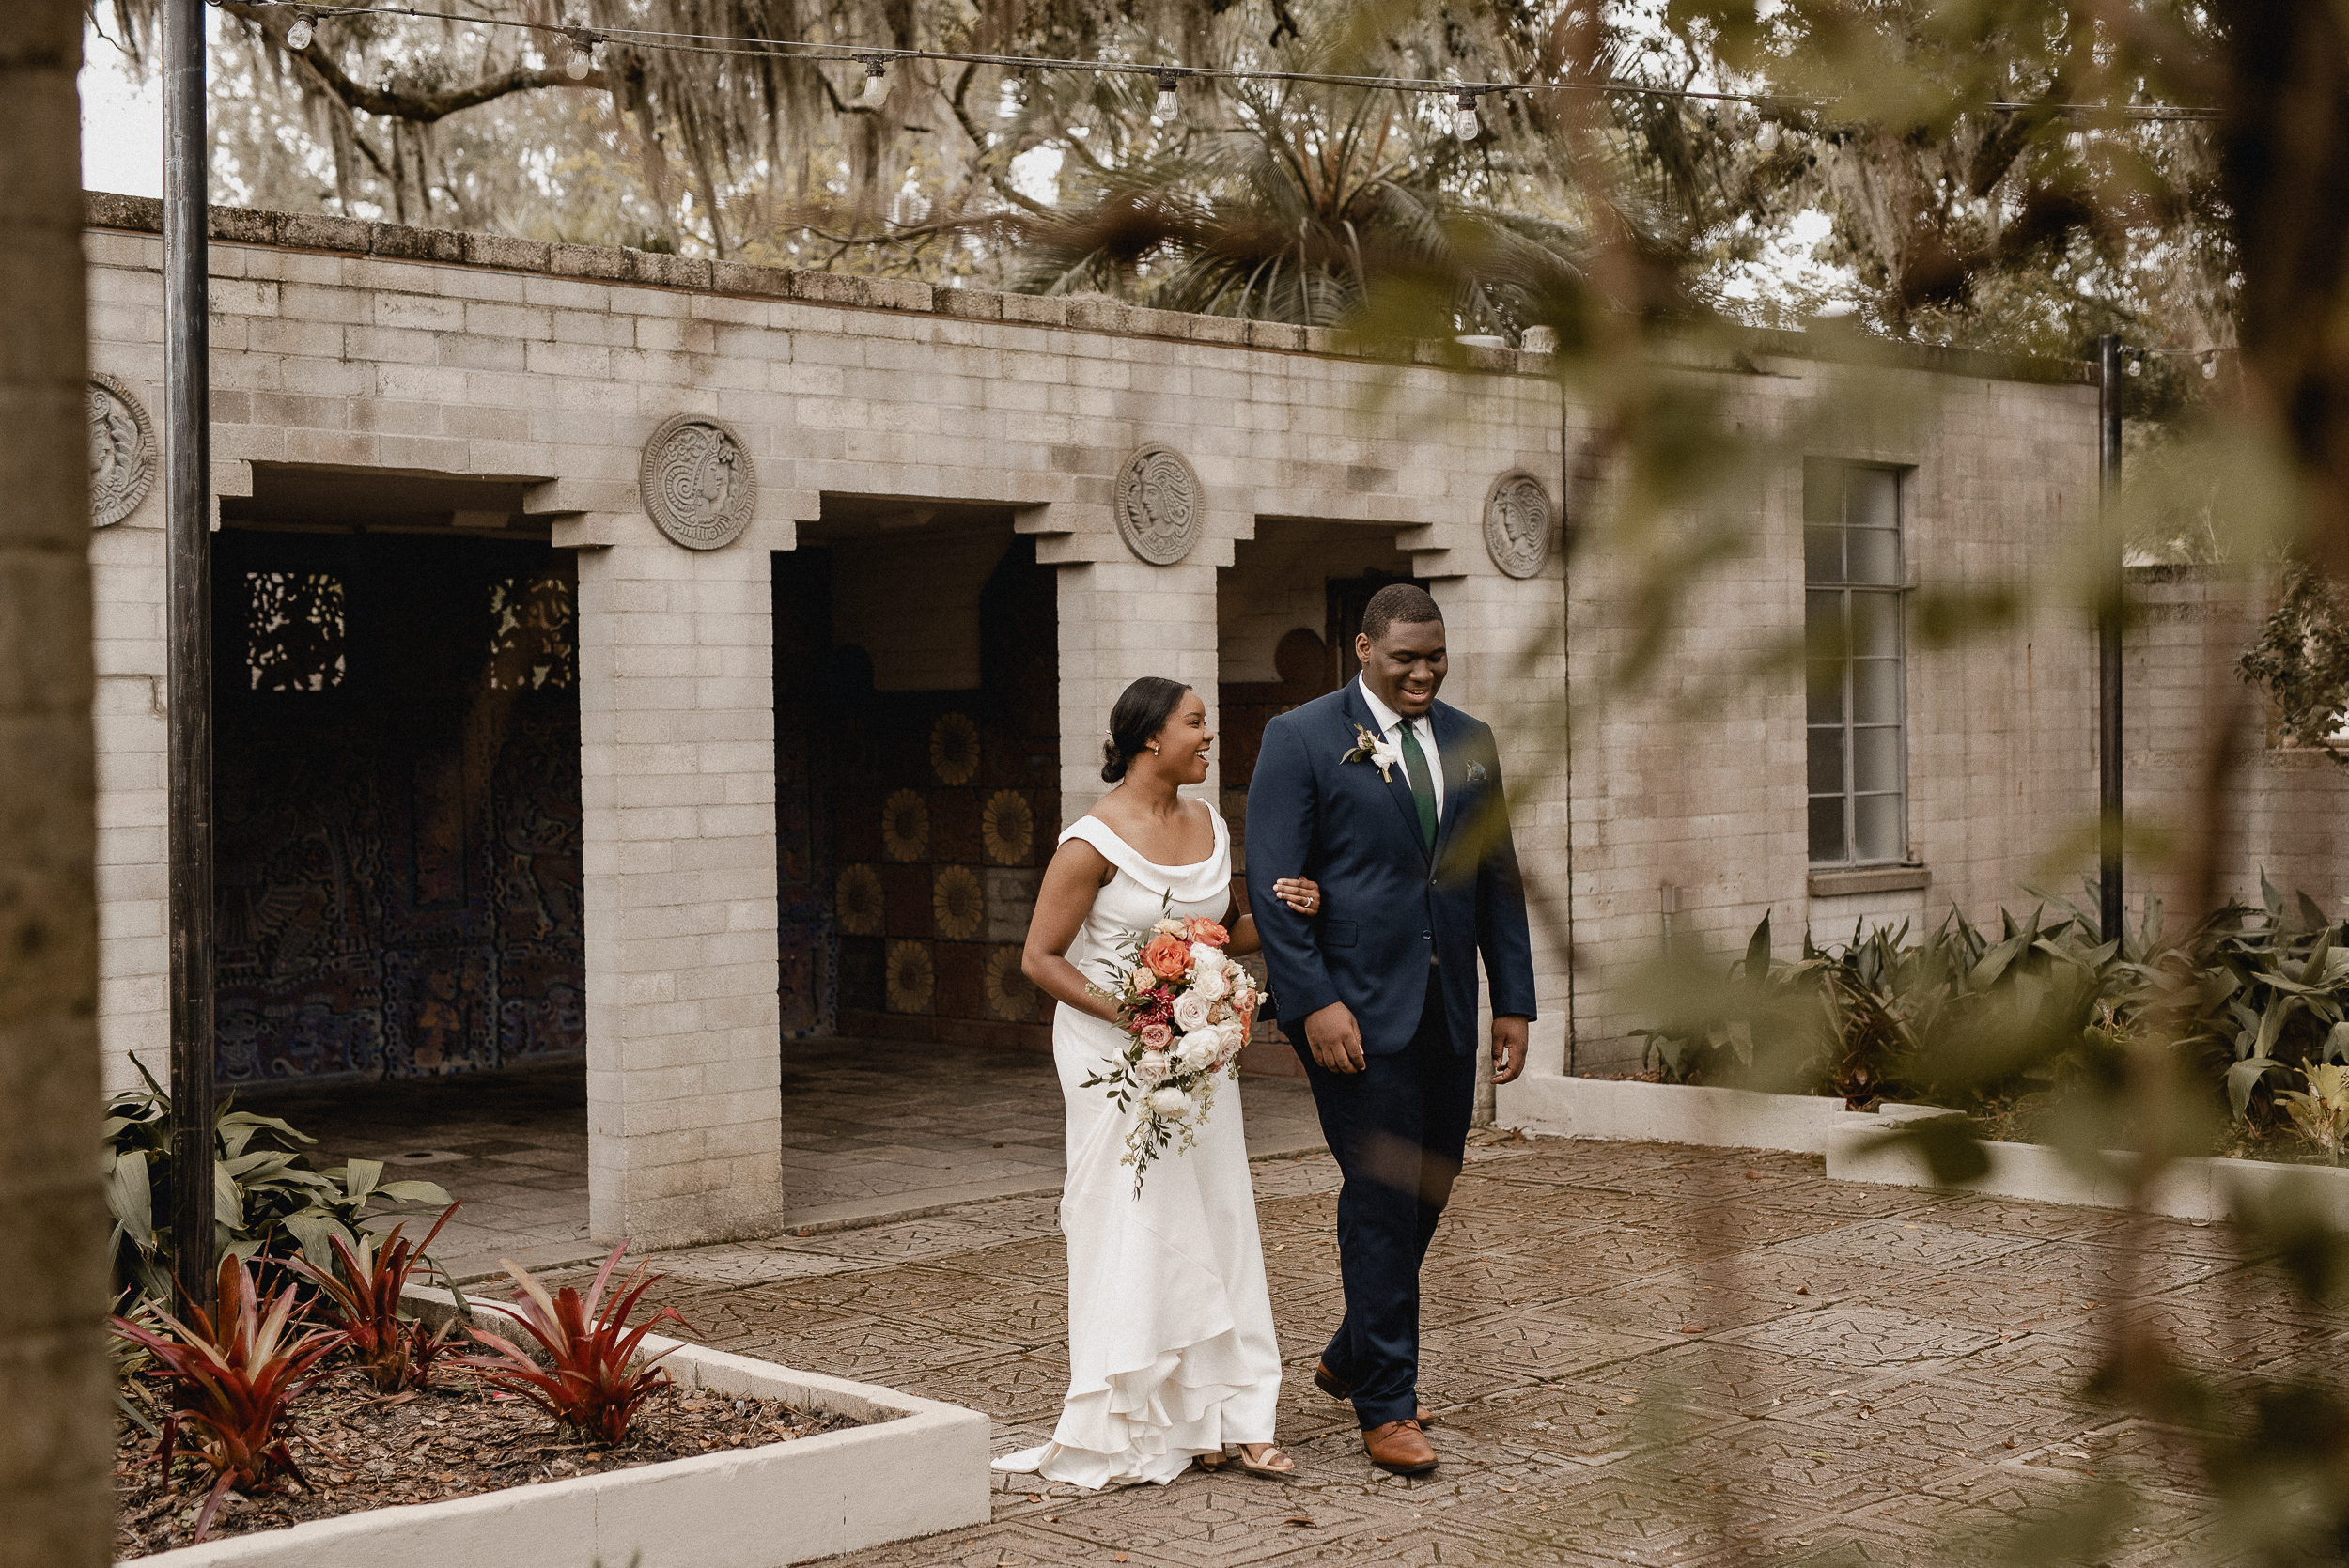 Florida Georgia Couples, Engagement, Destination Elopement and Intimate Wedding Photographer Orlando Local Mayan Courtyard Maitland art and history museum